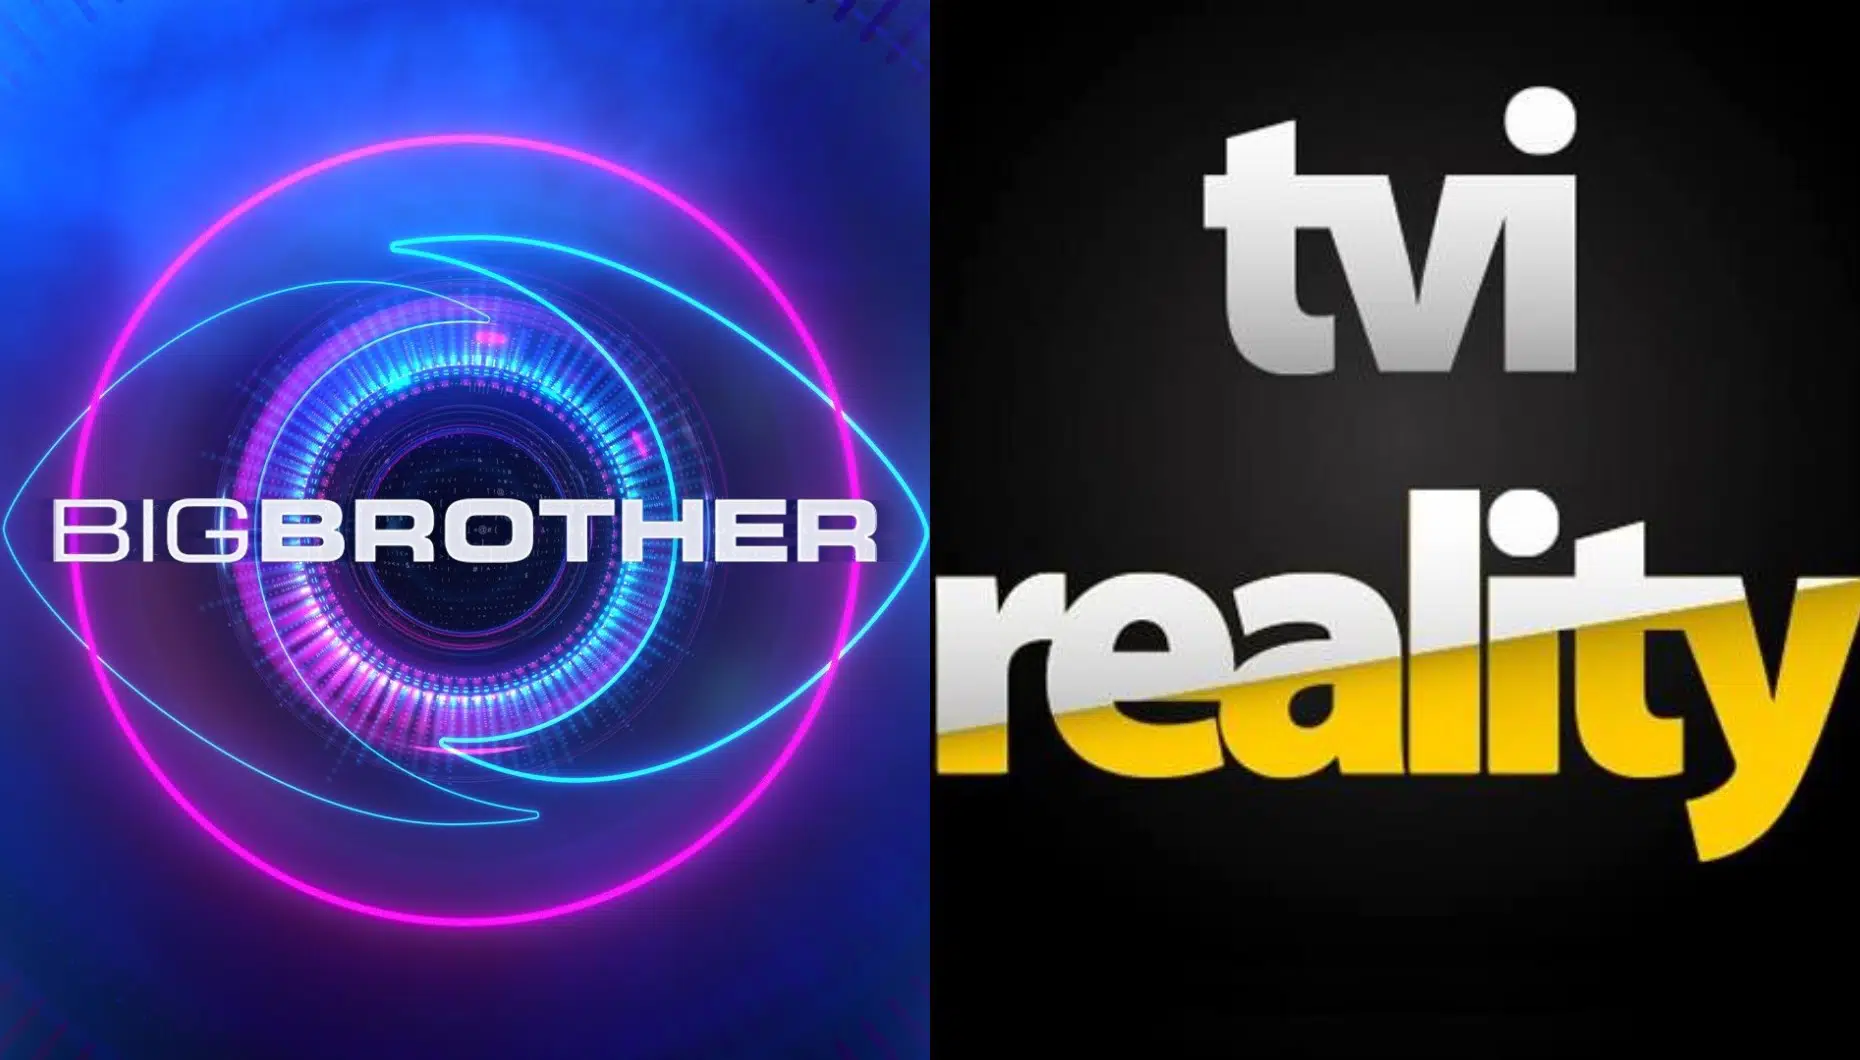 Big Brother, Tvi Reality